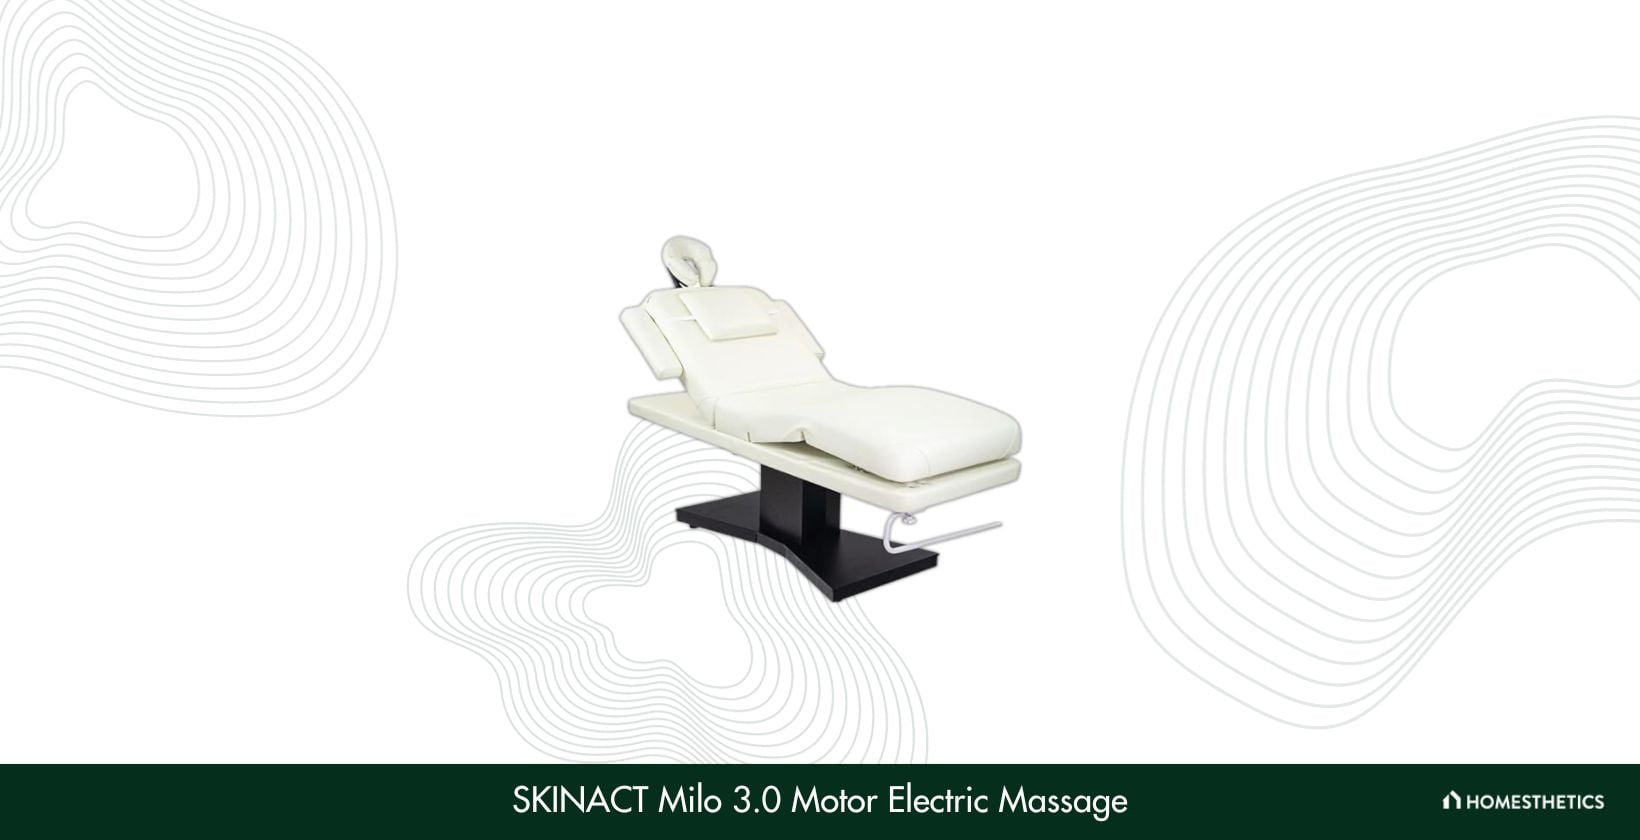 SKINACT Milo 3.0 Motor Electric Massage Facial BedTable SKU164251